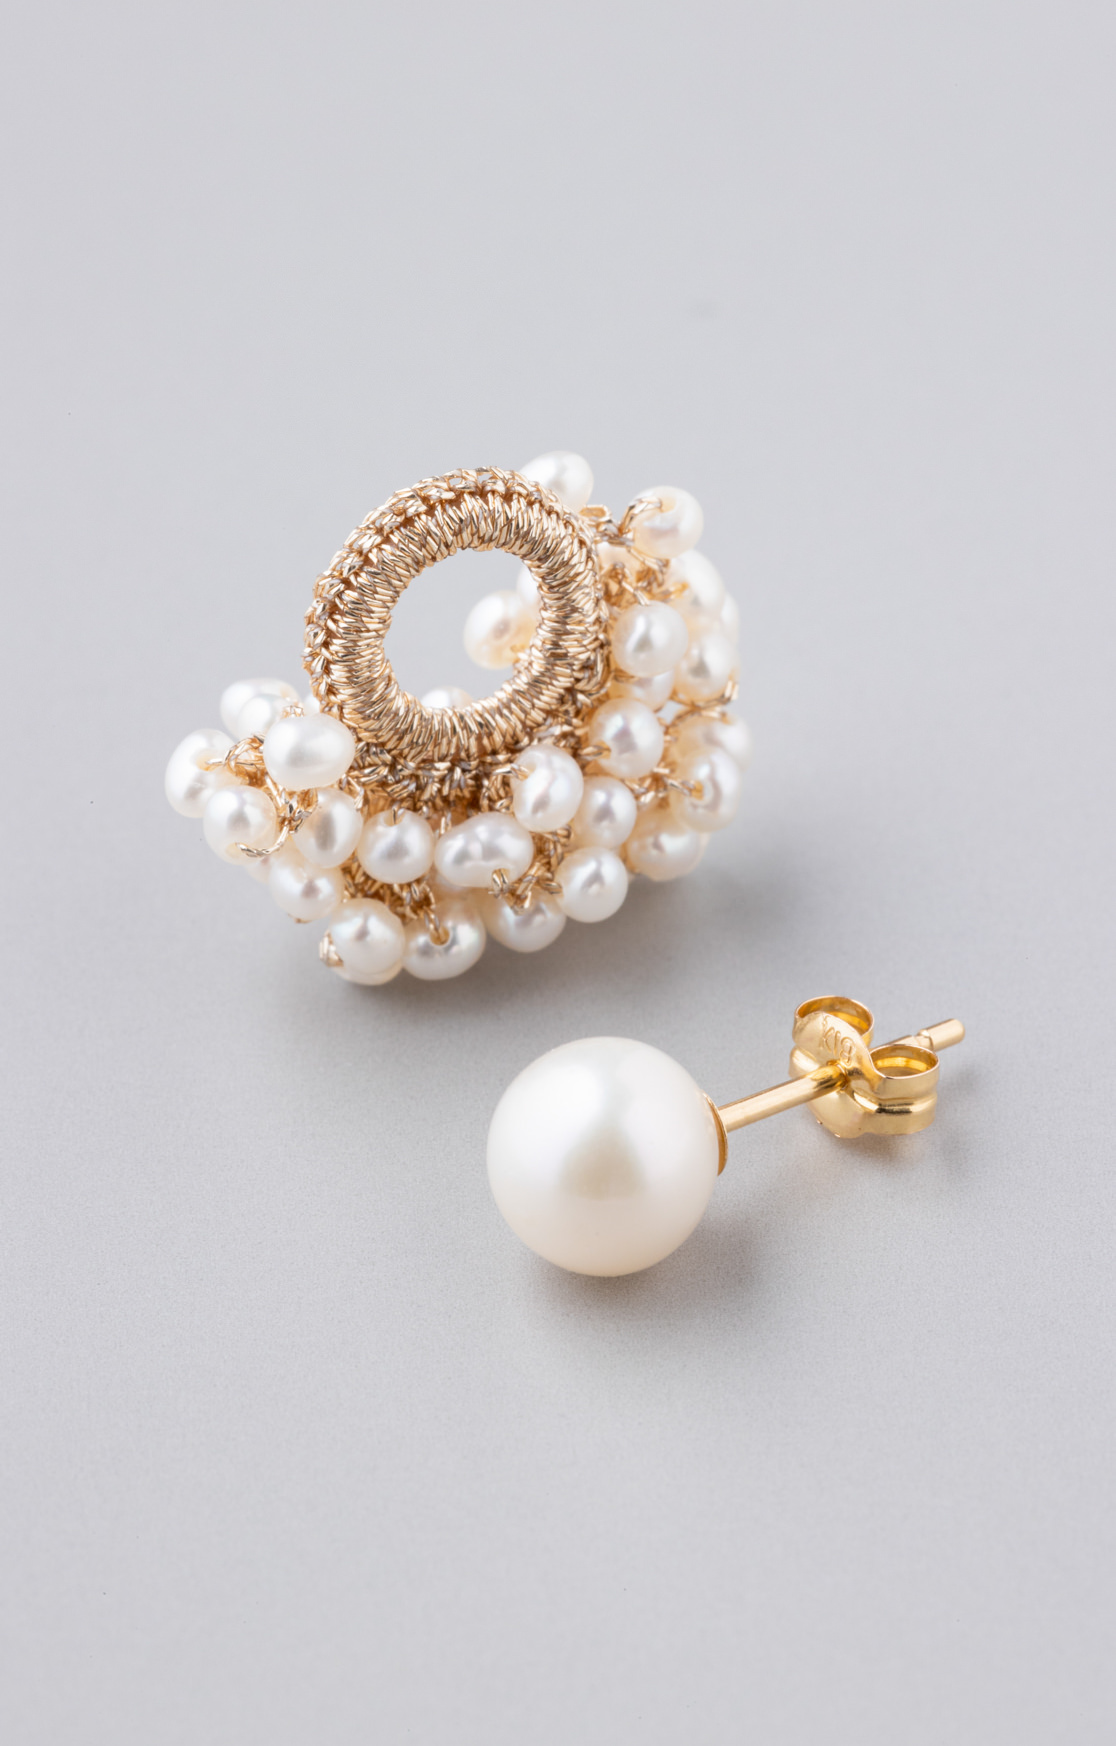 Pearl charm pierce